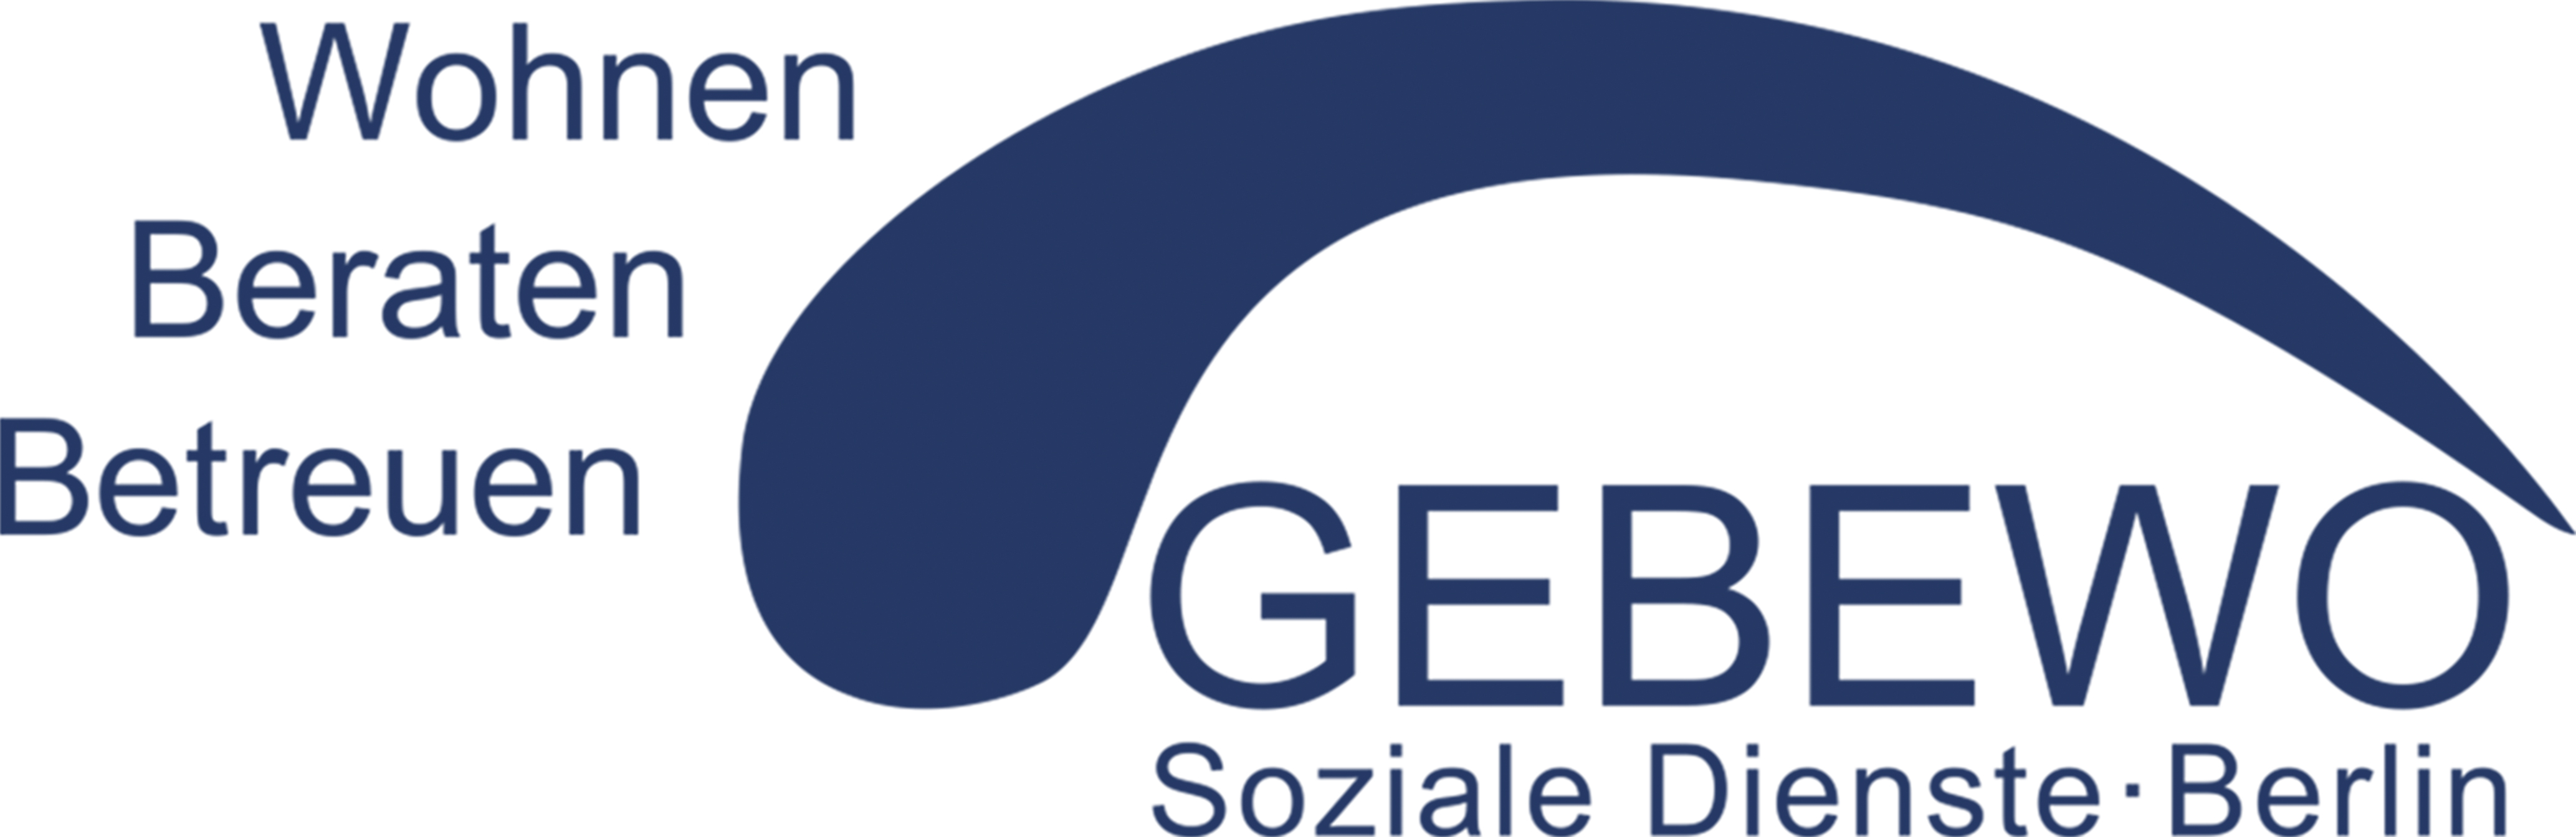 Logo: Gebewo - Soziale Dienste - Berlin gGmbH